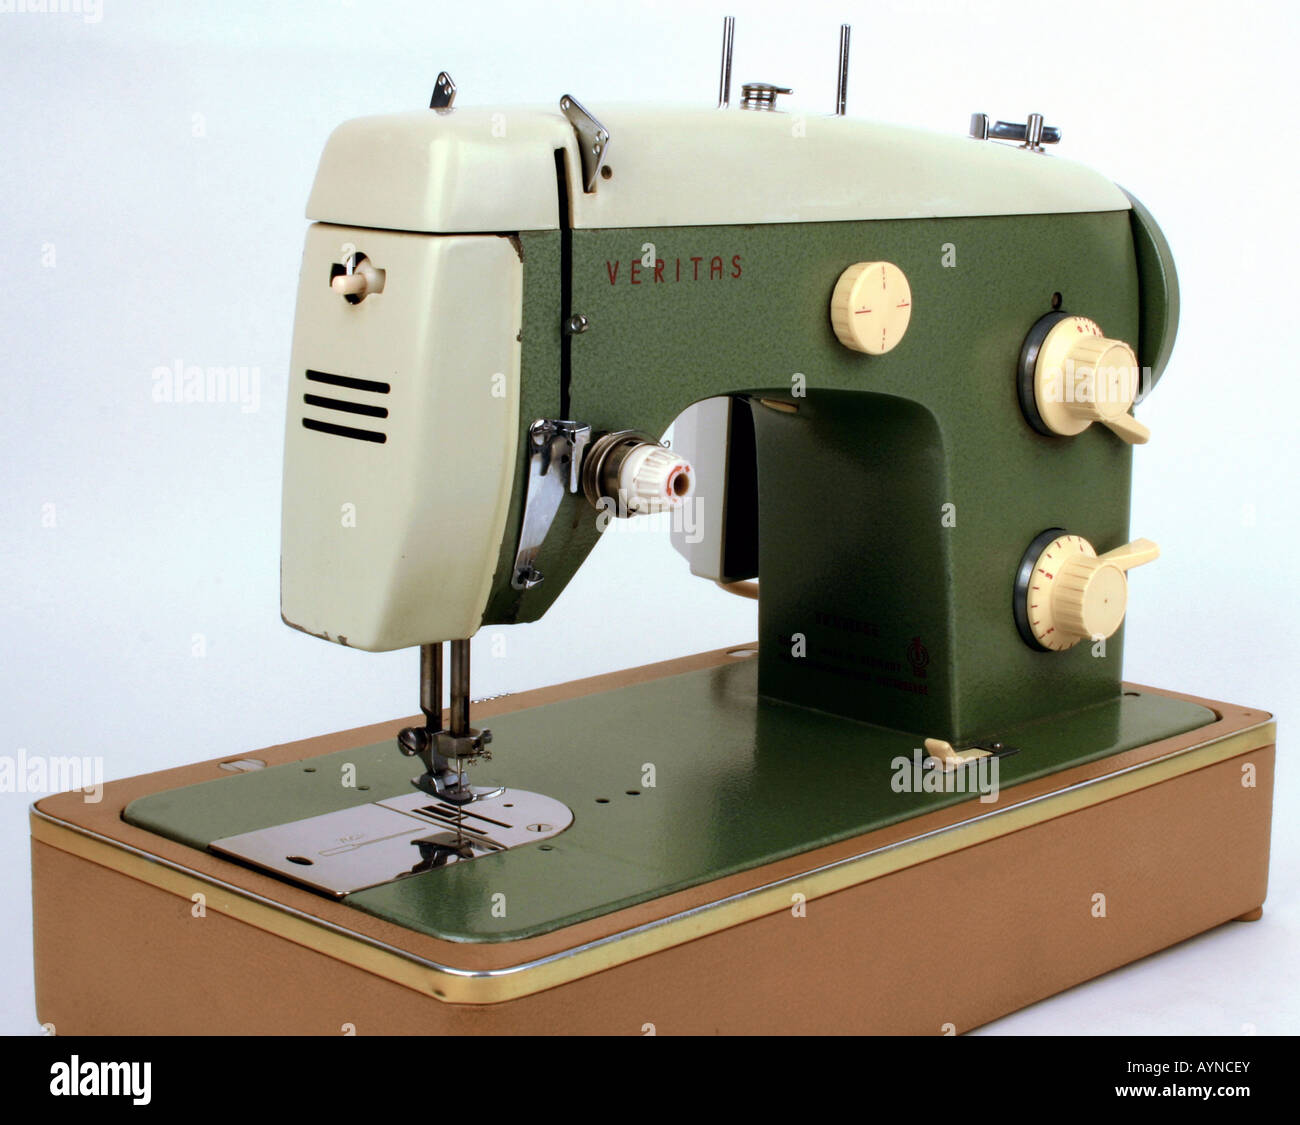 File:Alfa maquina de coser.jpg - Wikimedia Commons